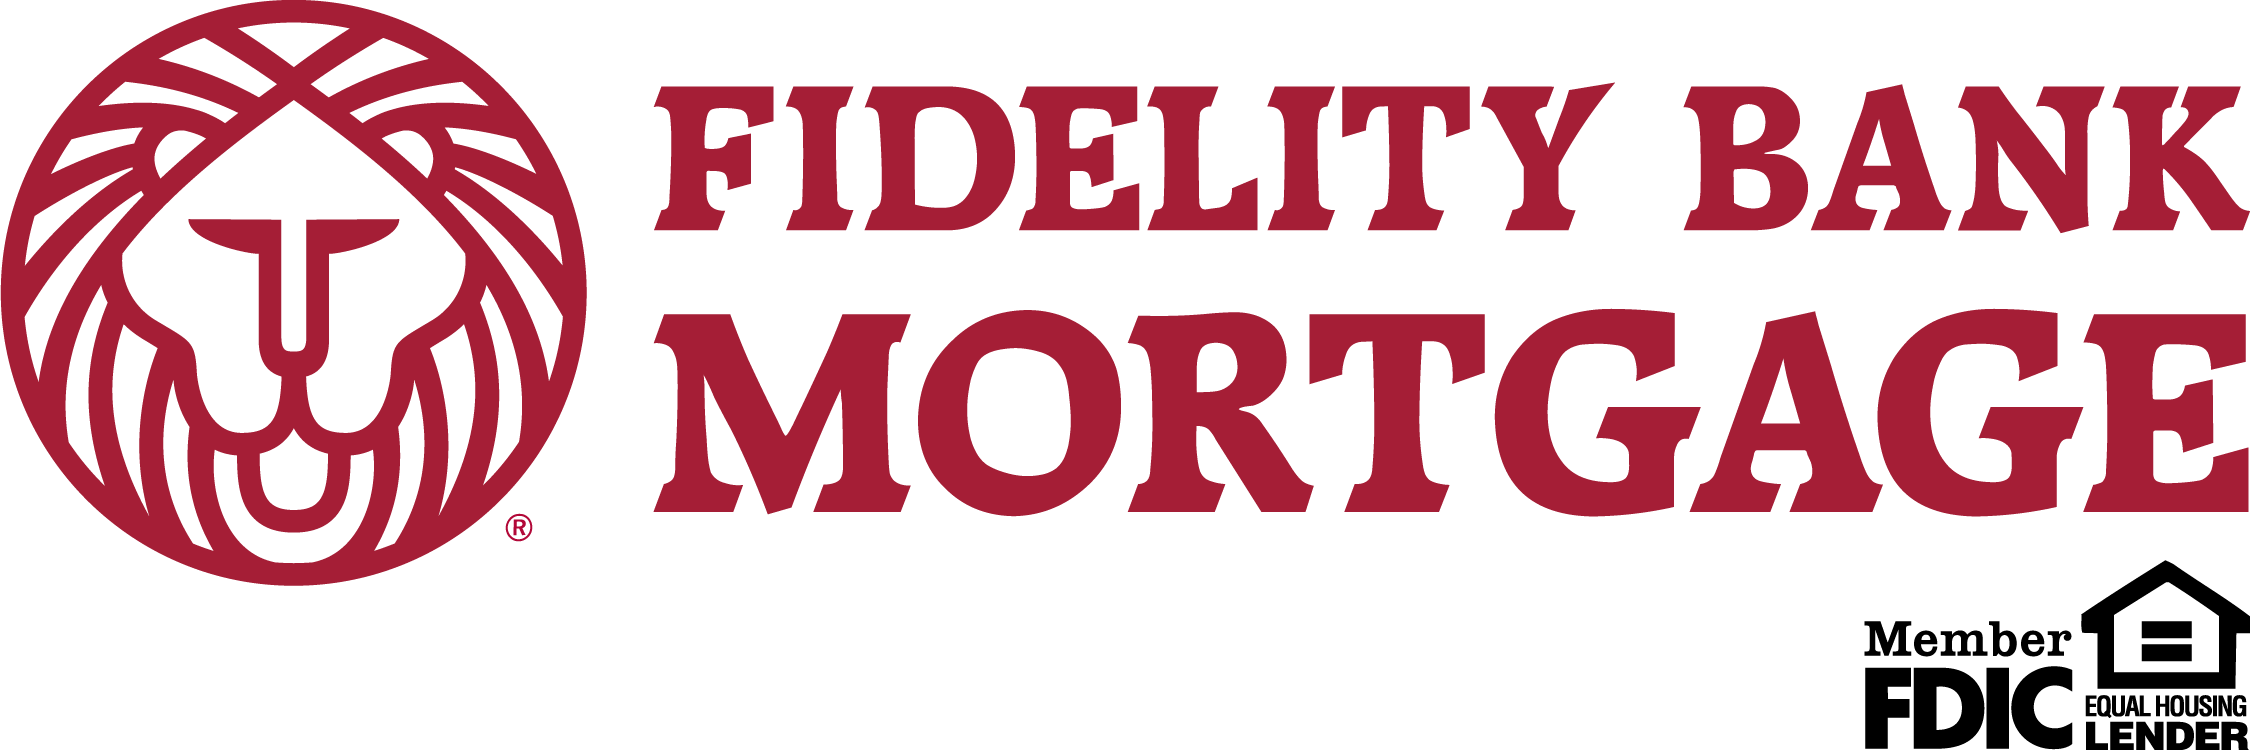 Fidelity Bank Mortgage